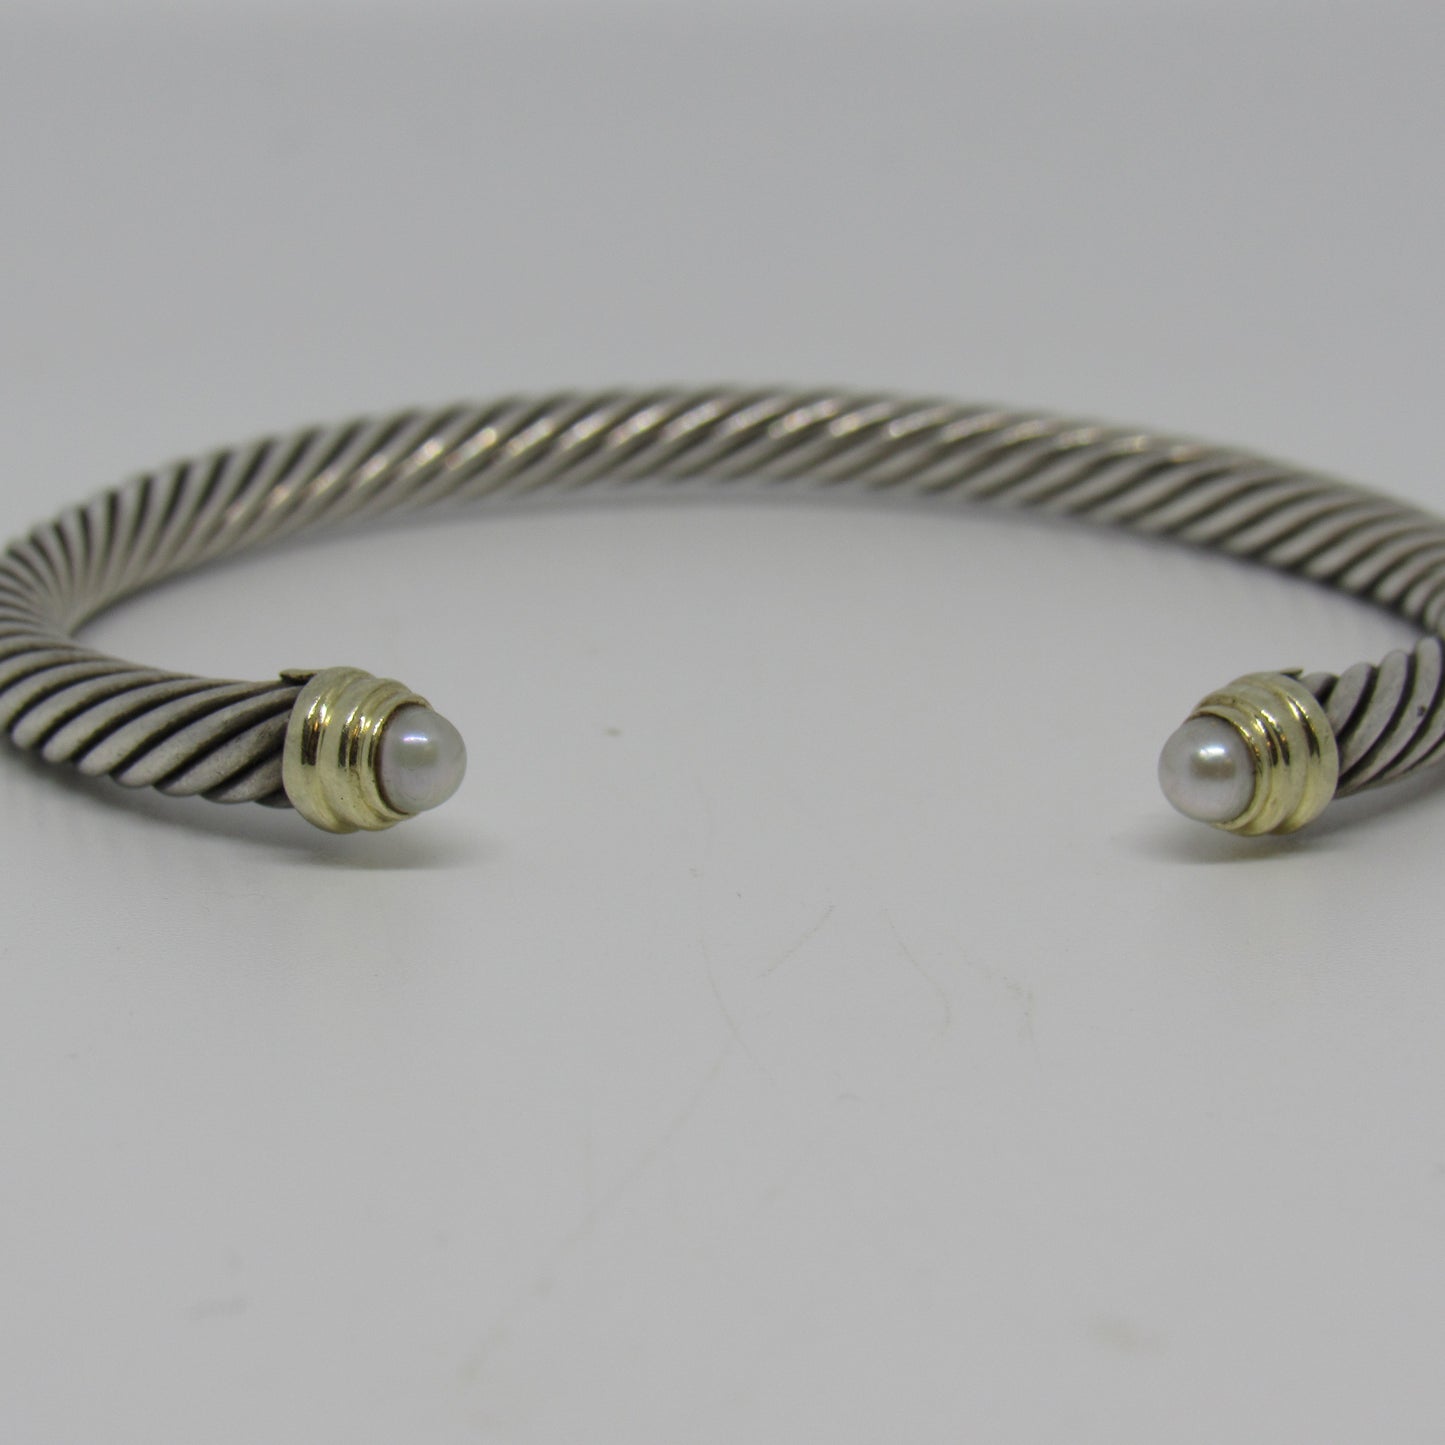 David Yurman Sterling Silver 14k Gold Pearl Tip 5mm Cable Cuff Bracelet - 7 inch